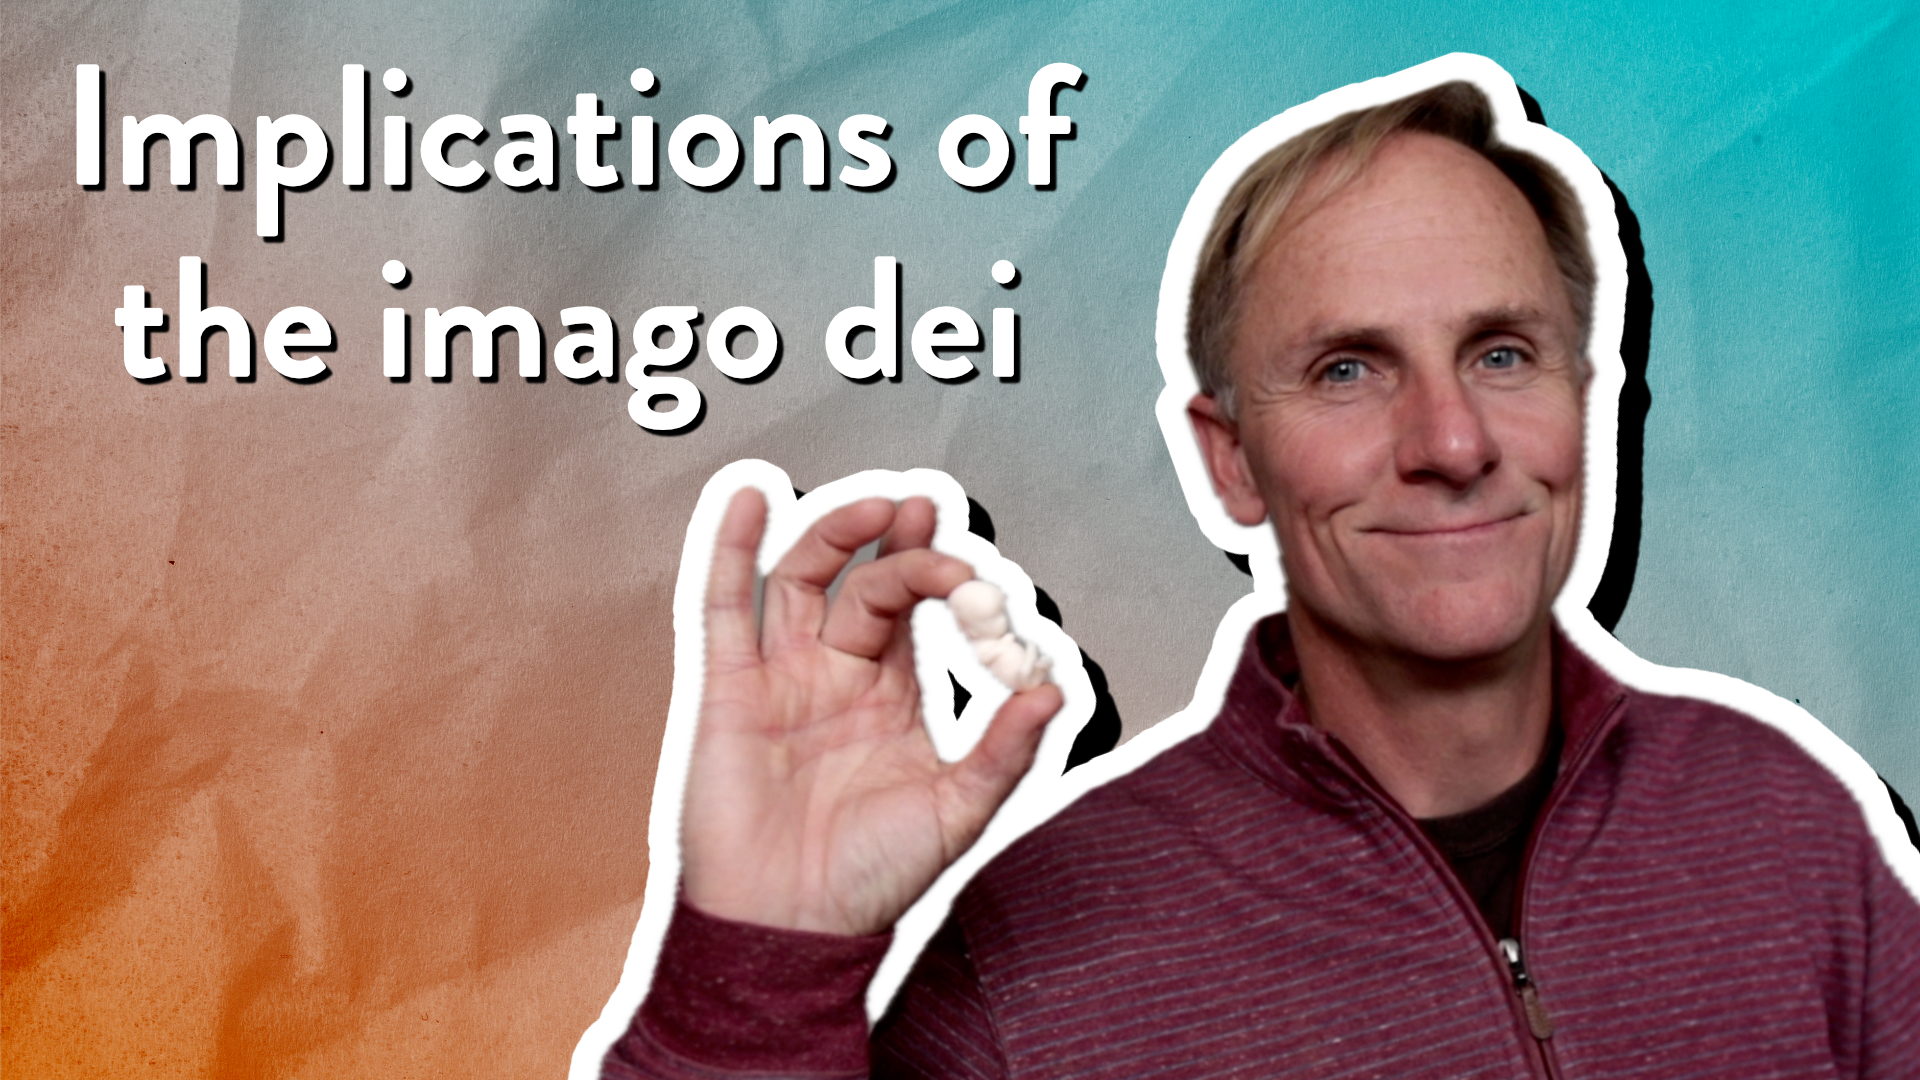 Implications of the imago dei